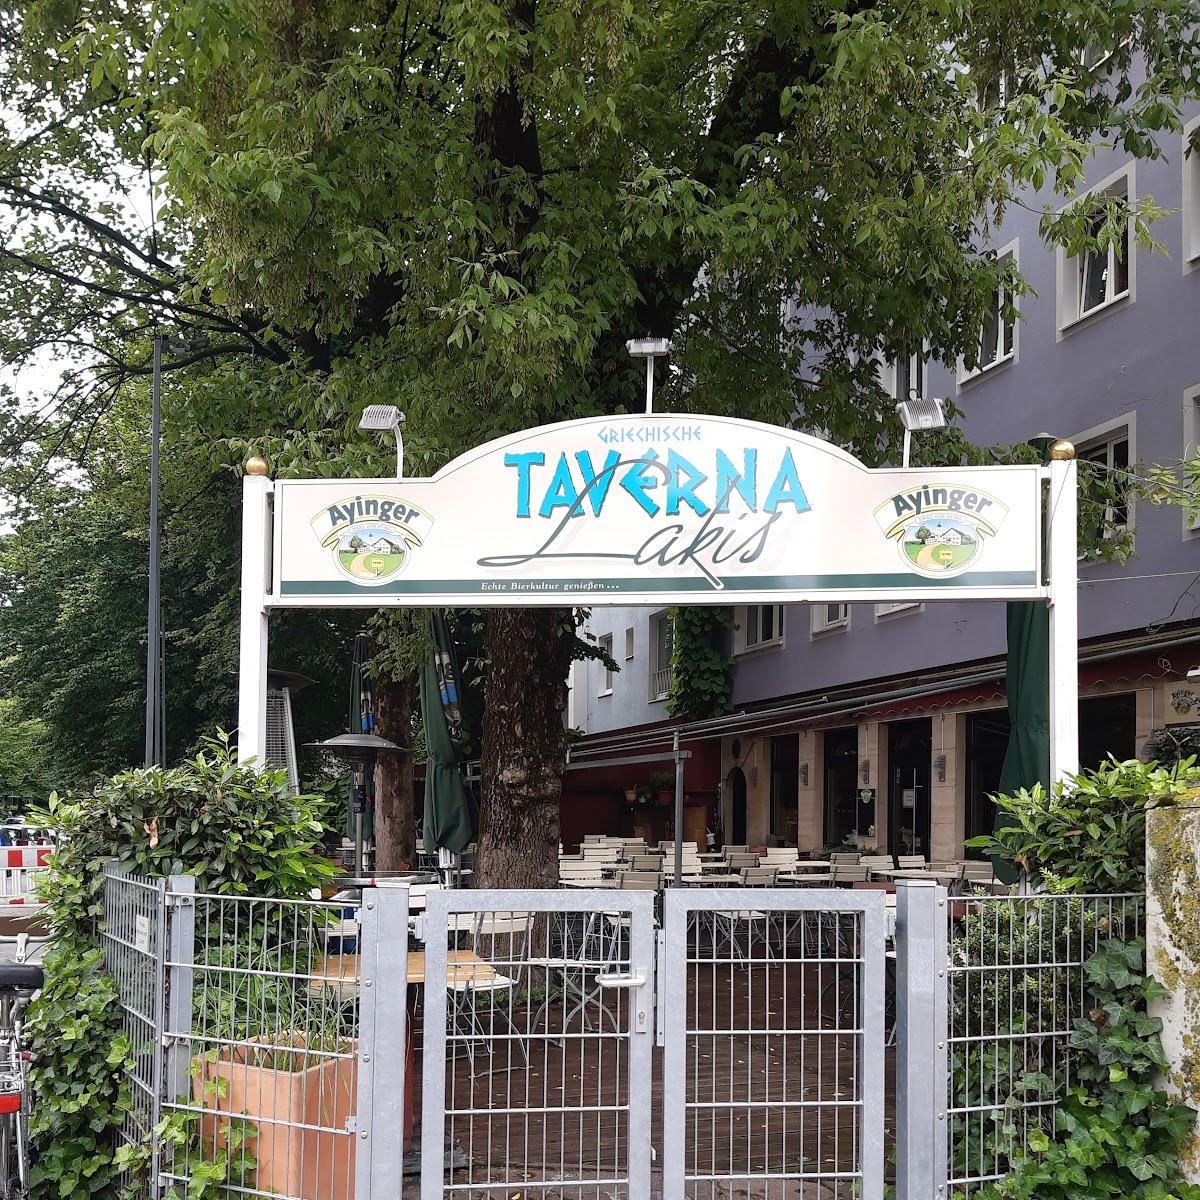 Restaurant "Taverna Lakis" in München